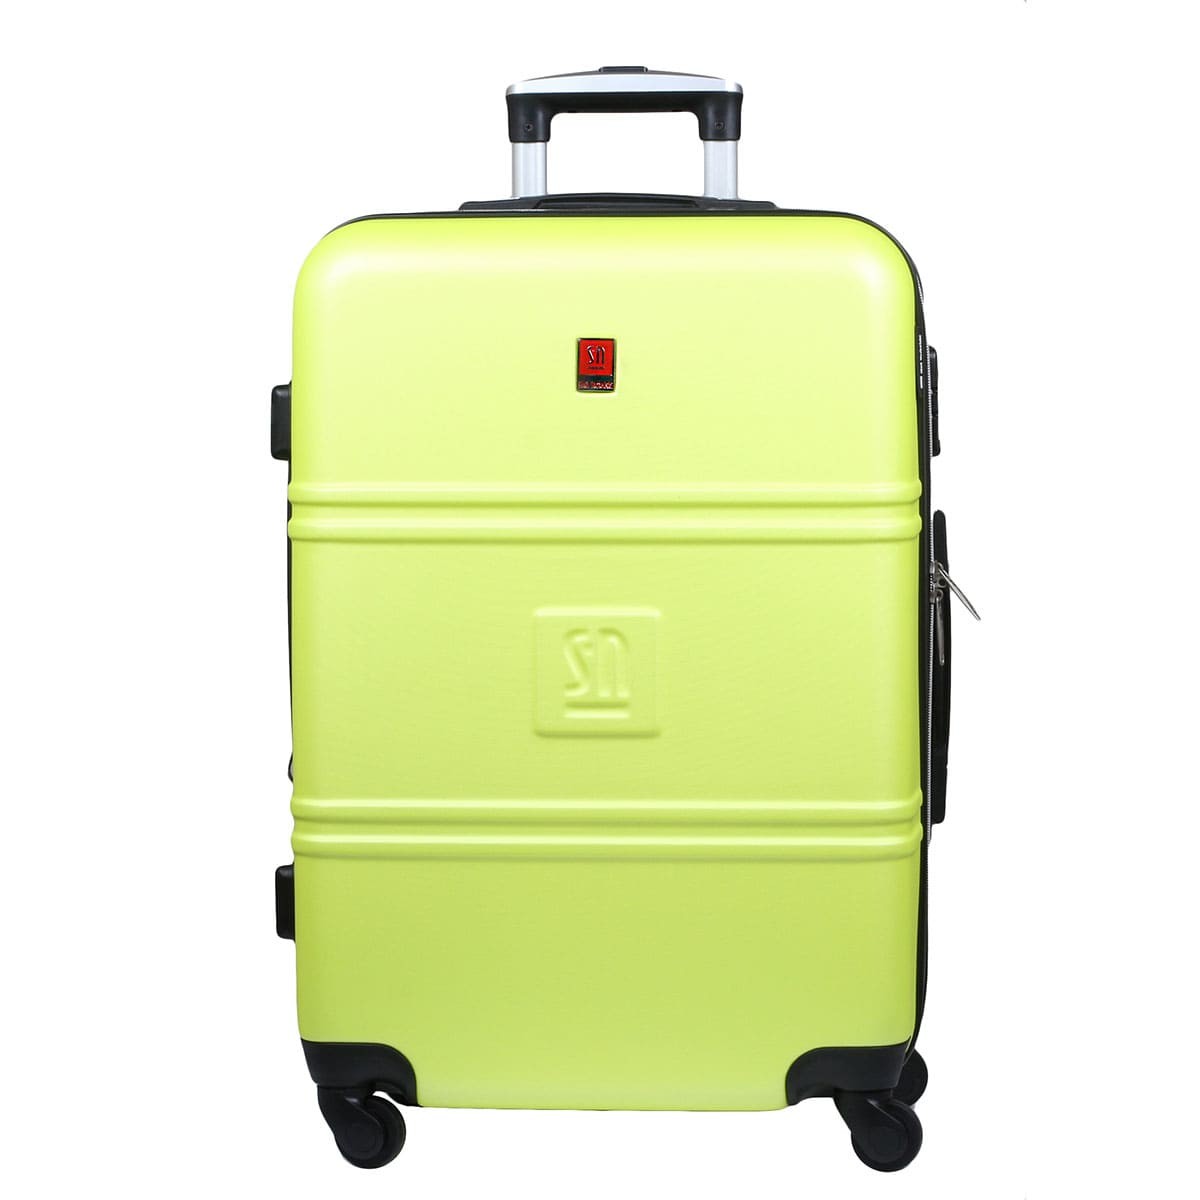 zolta-walizka-podrozna-srednia-na-kolkach-Art-Class-04-0411O-13.jpg